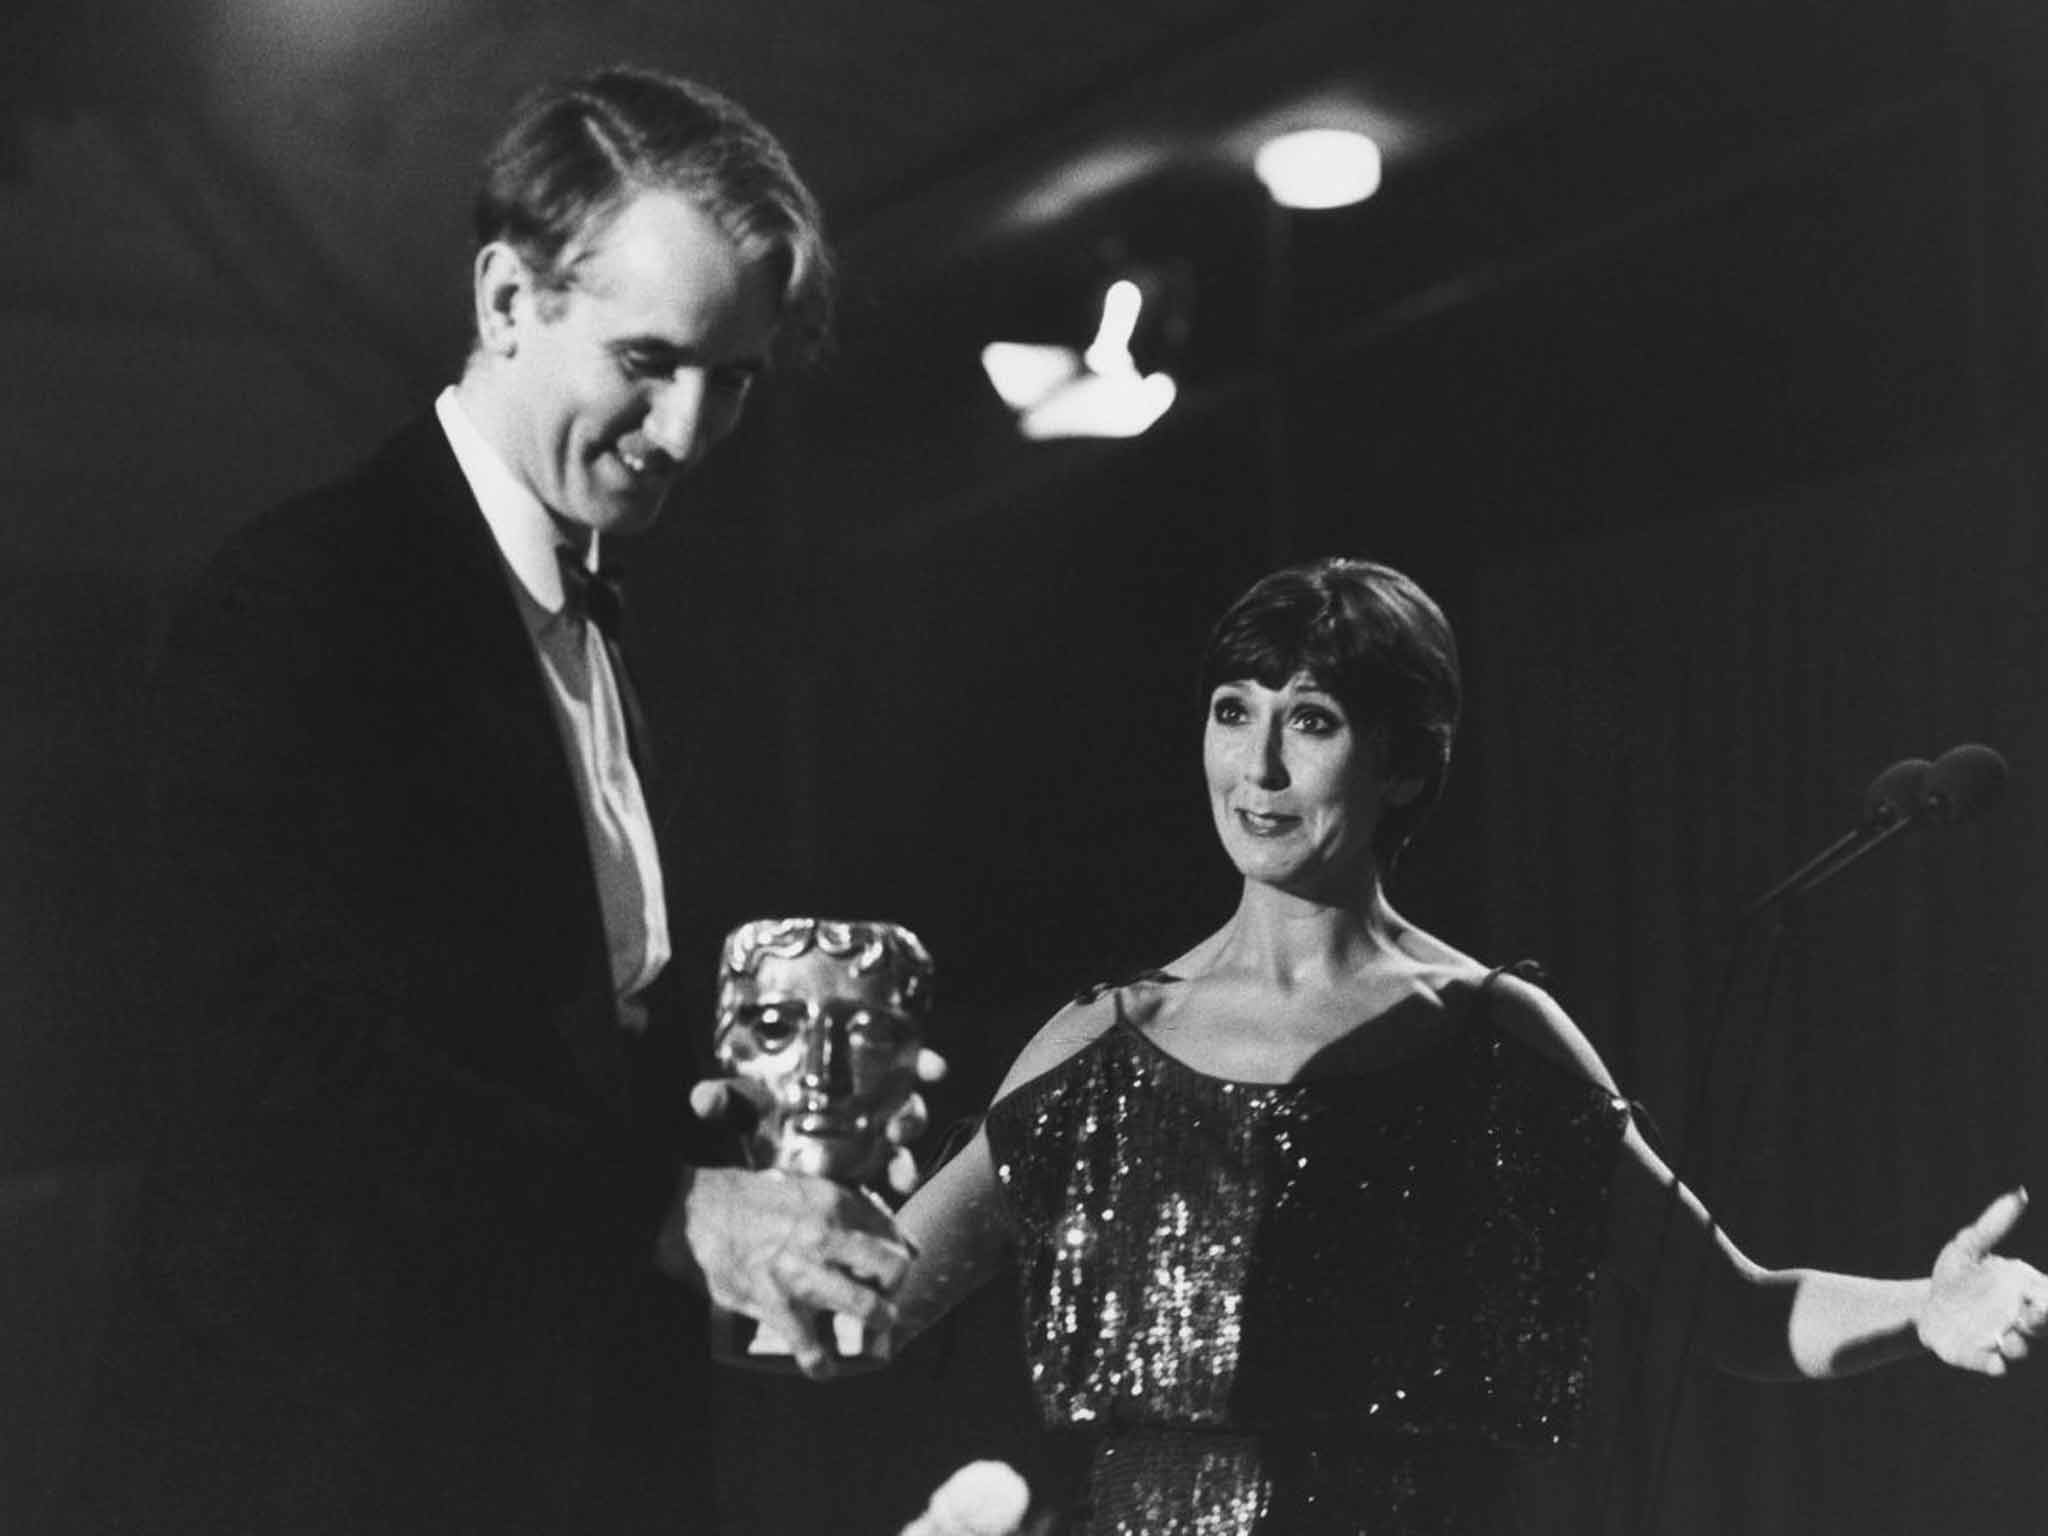 Gowers receives his 1983 Bafta award from Anita Harris